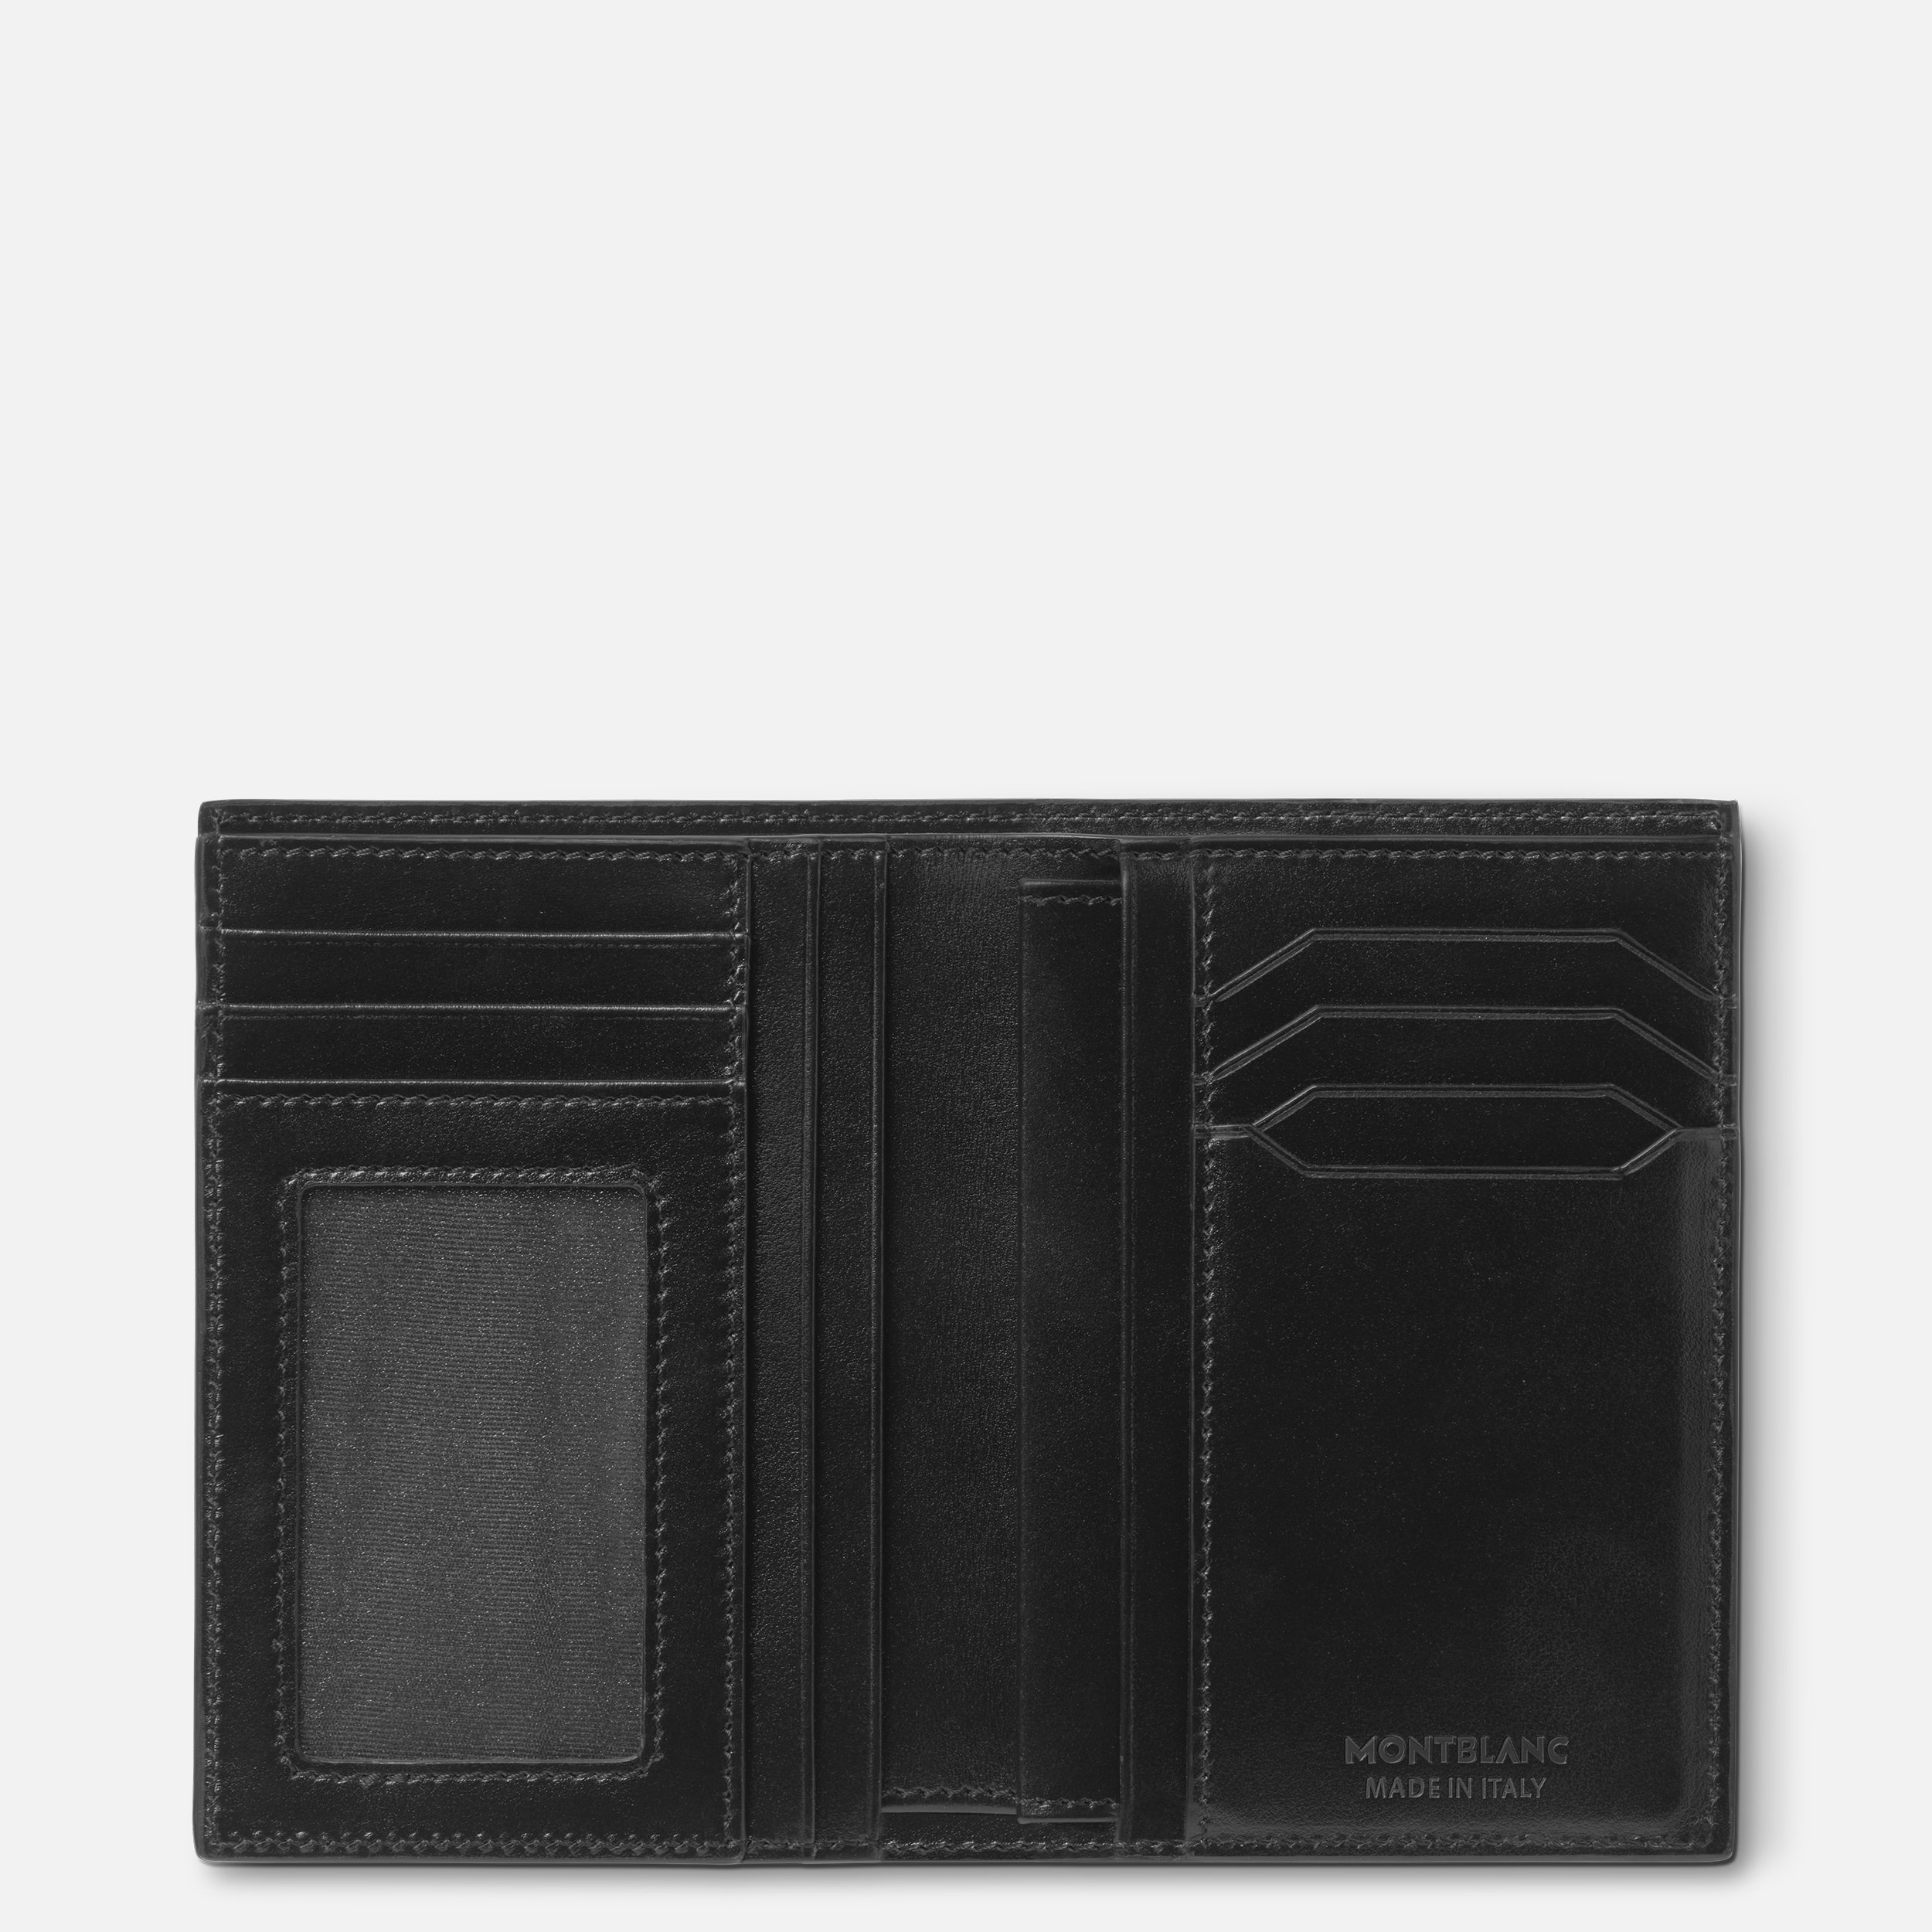 Meisterstück wallet 7cc with ID holder - 5